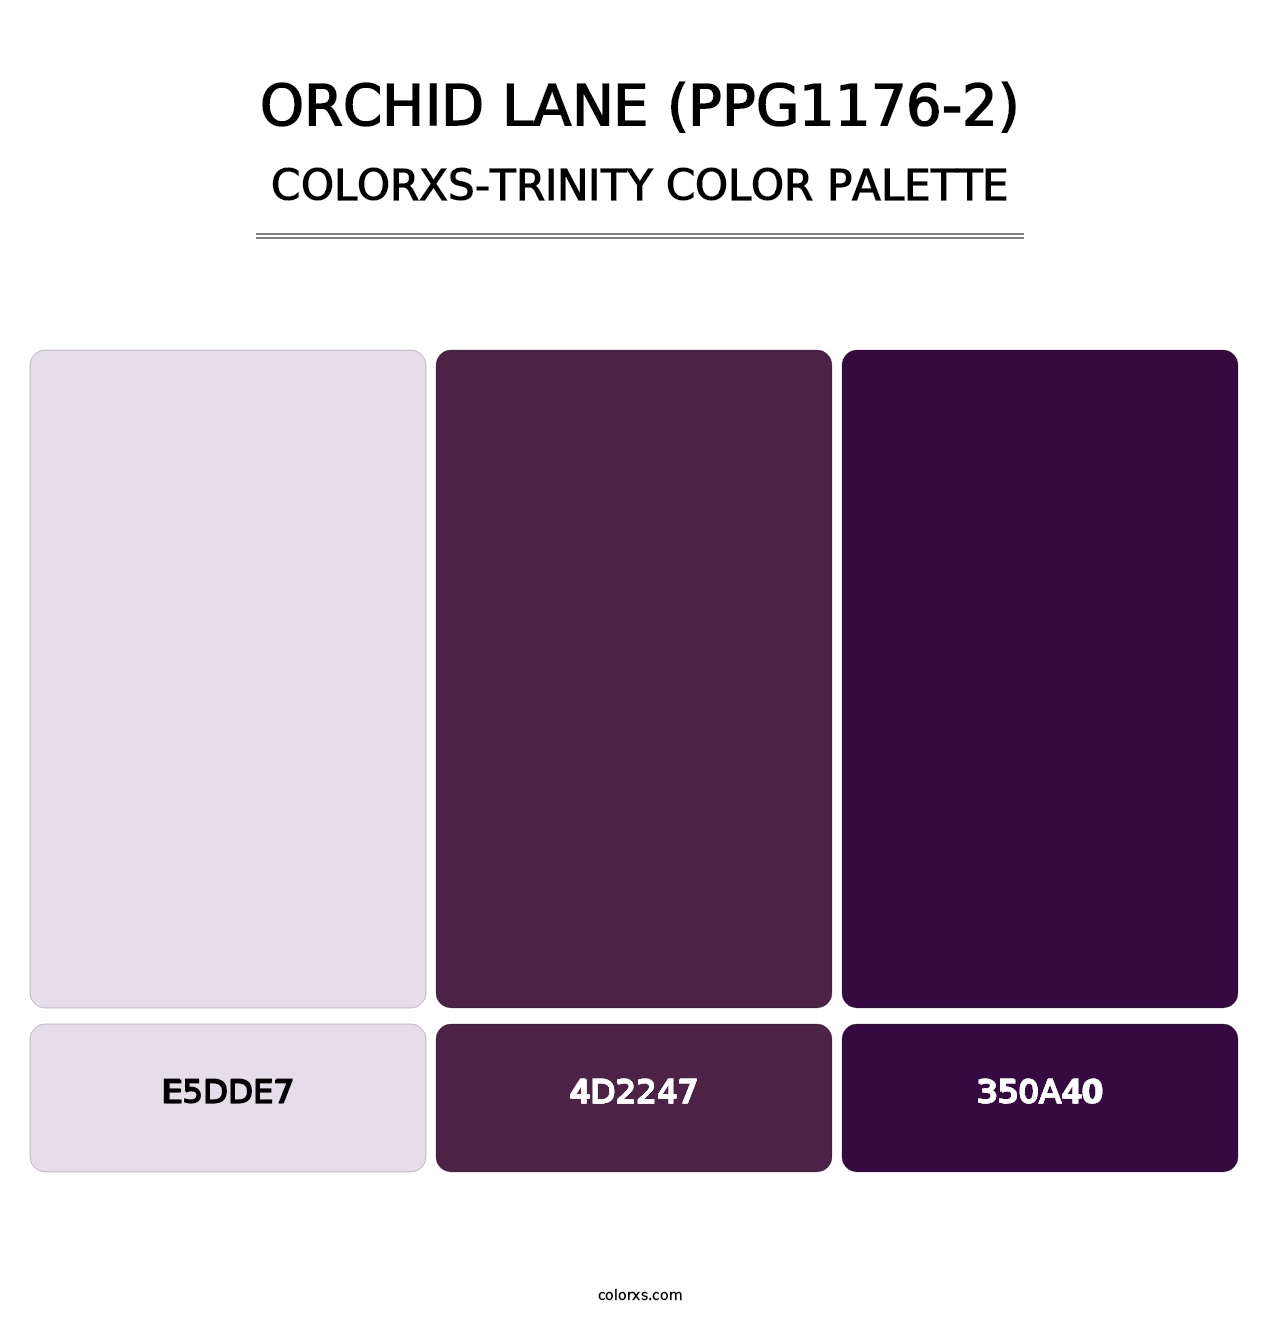 Orchid Lane (PPG1176-2) - Colorxs Trinity Palette